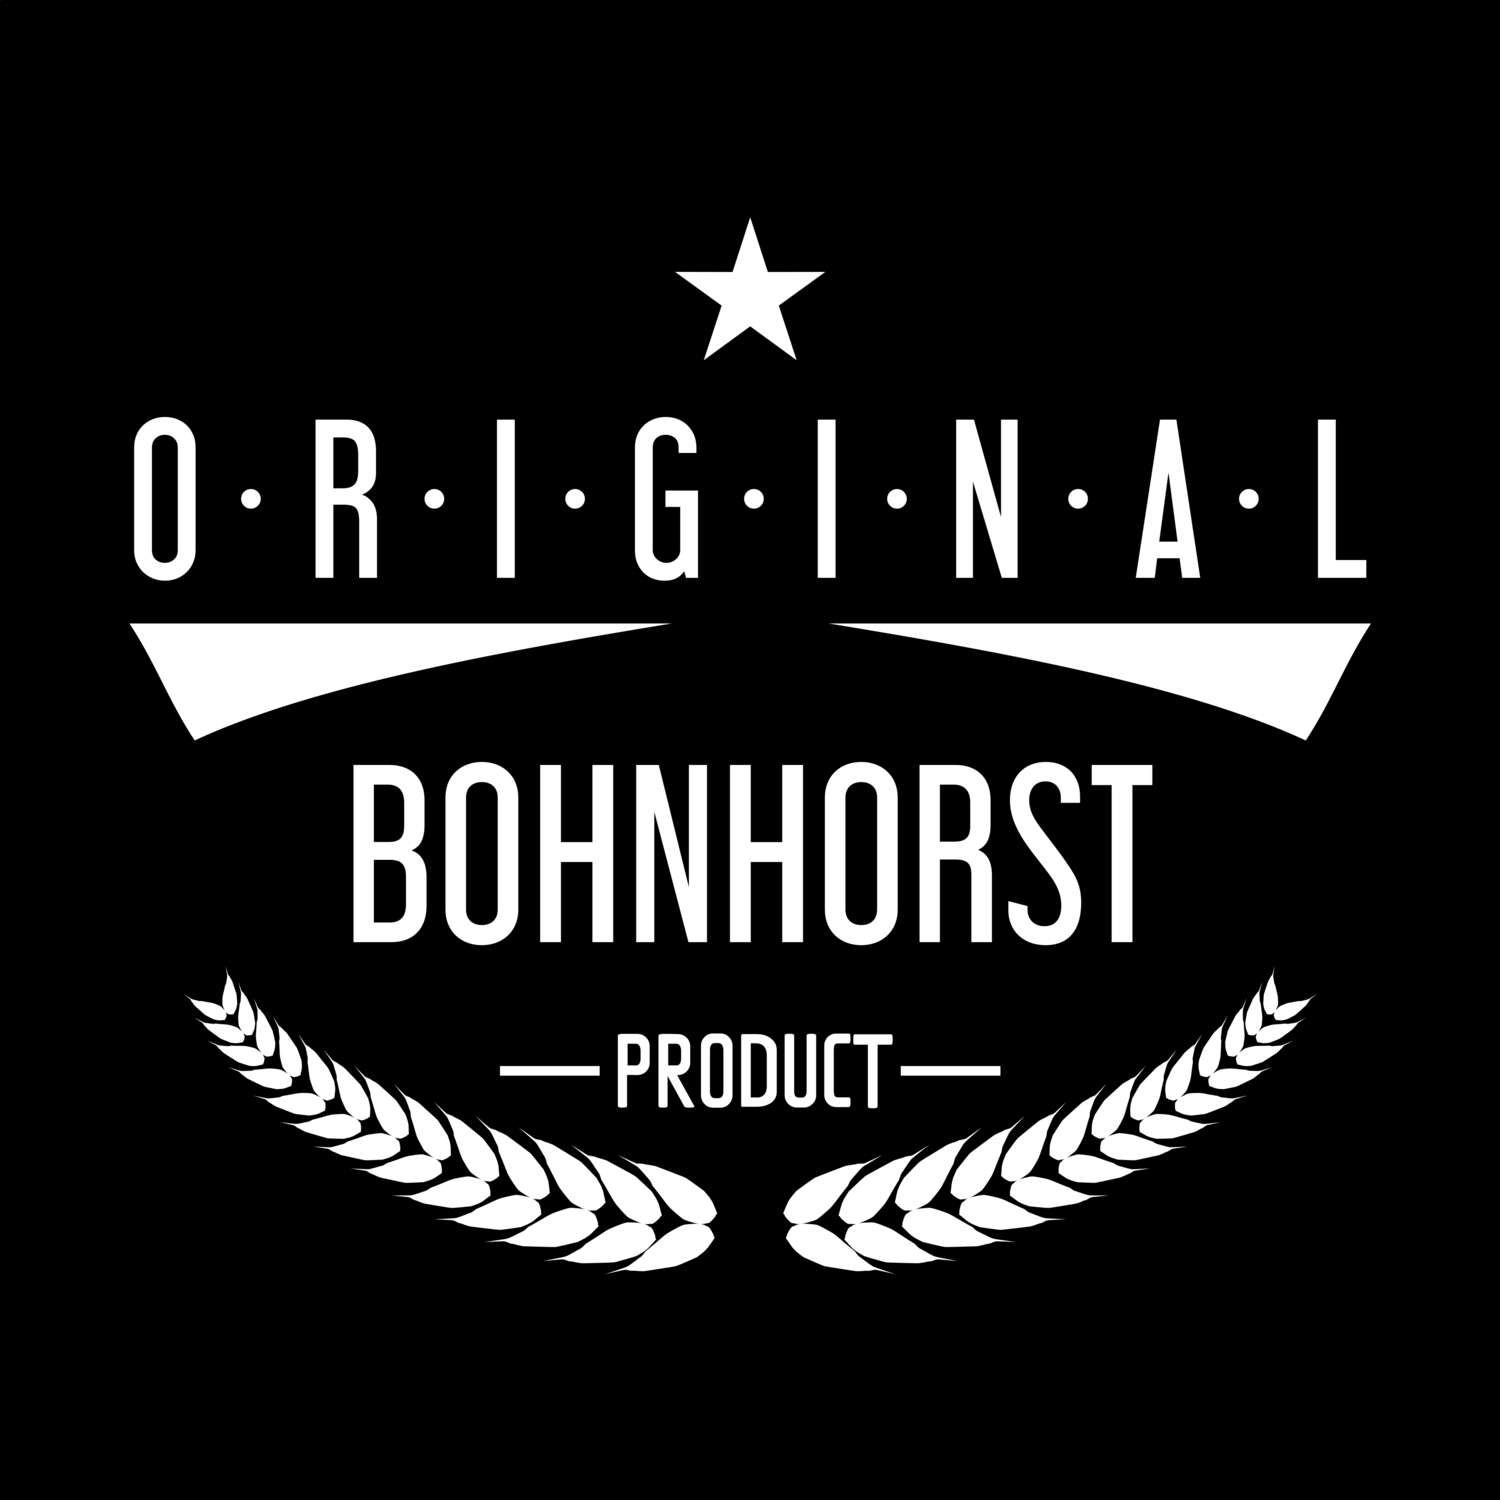 Bohnhorst T-Shirt »Original Product«